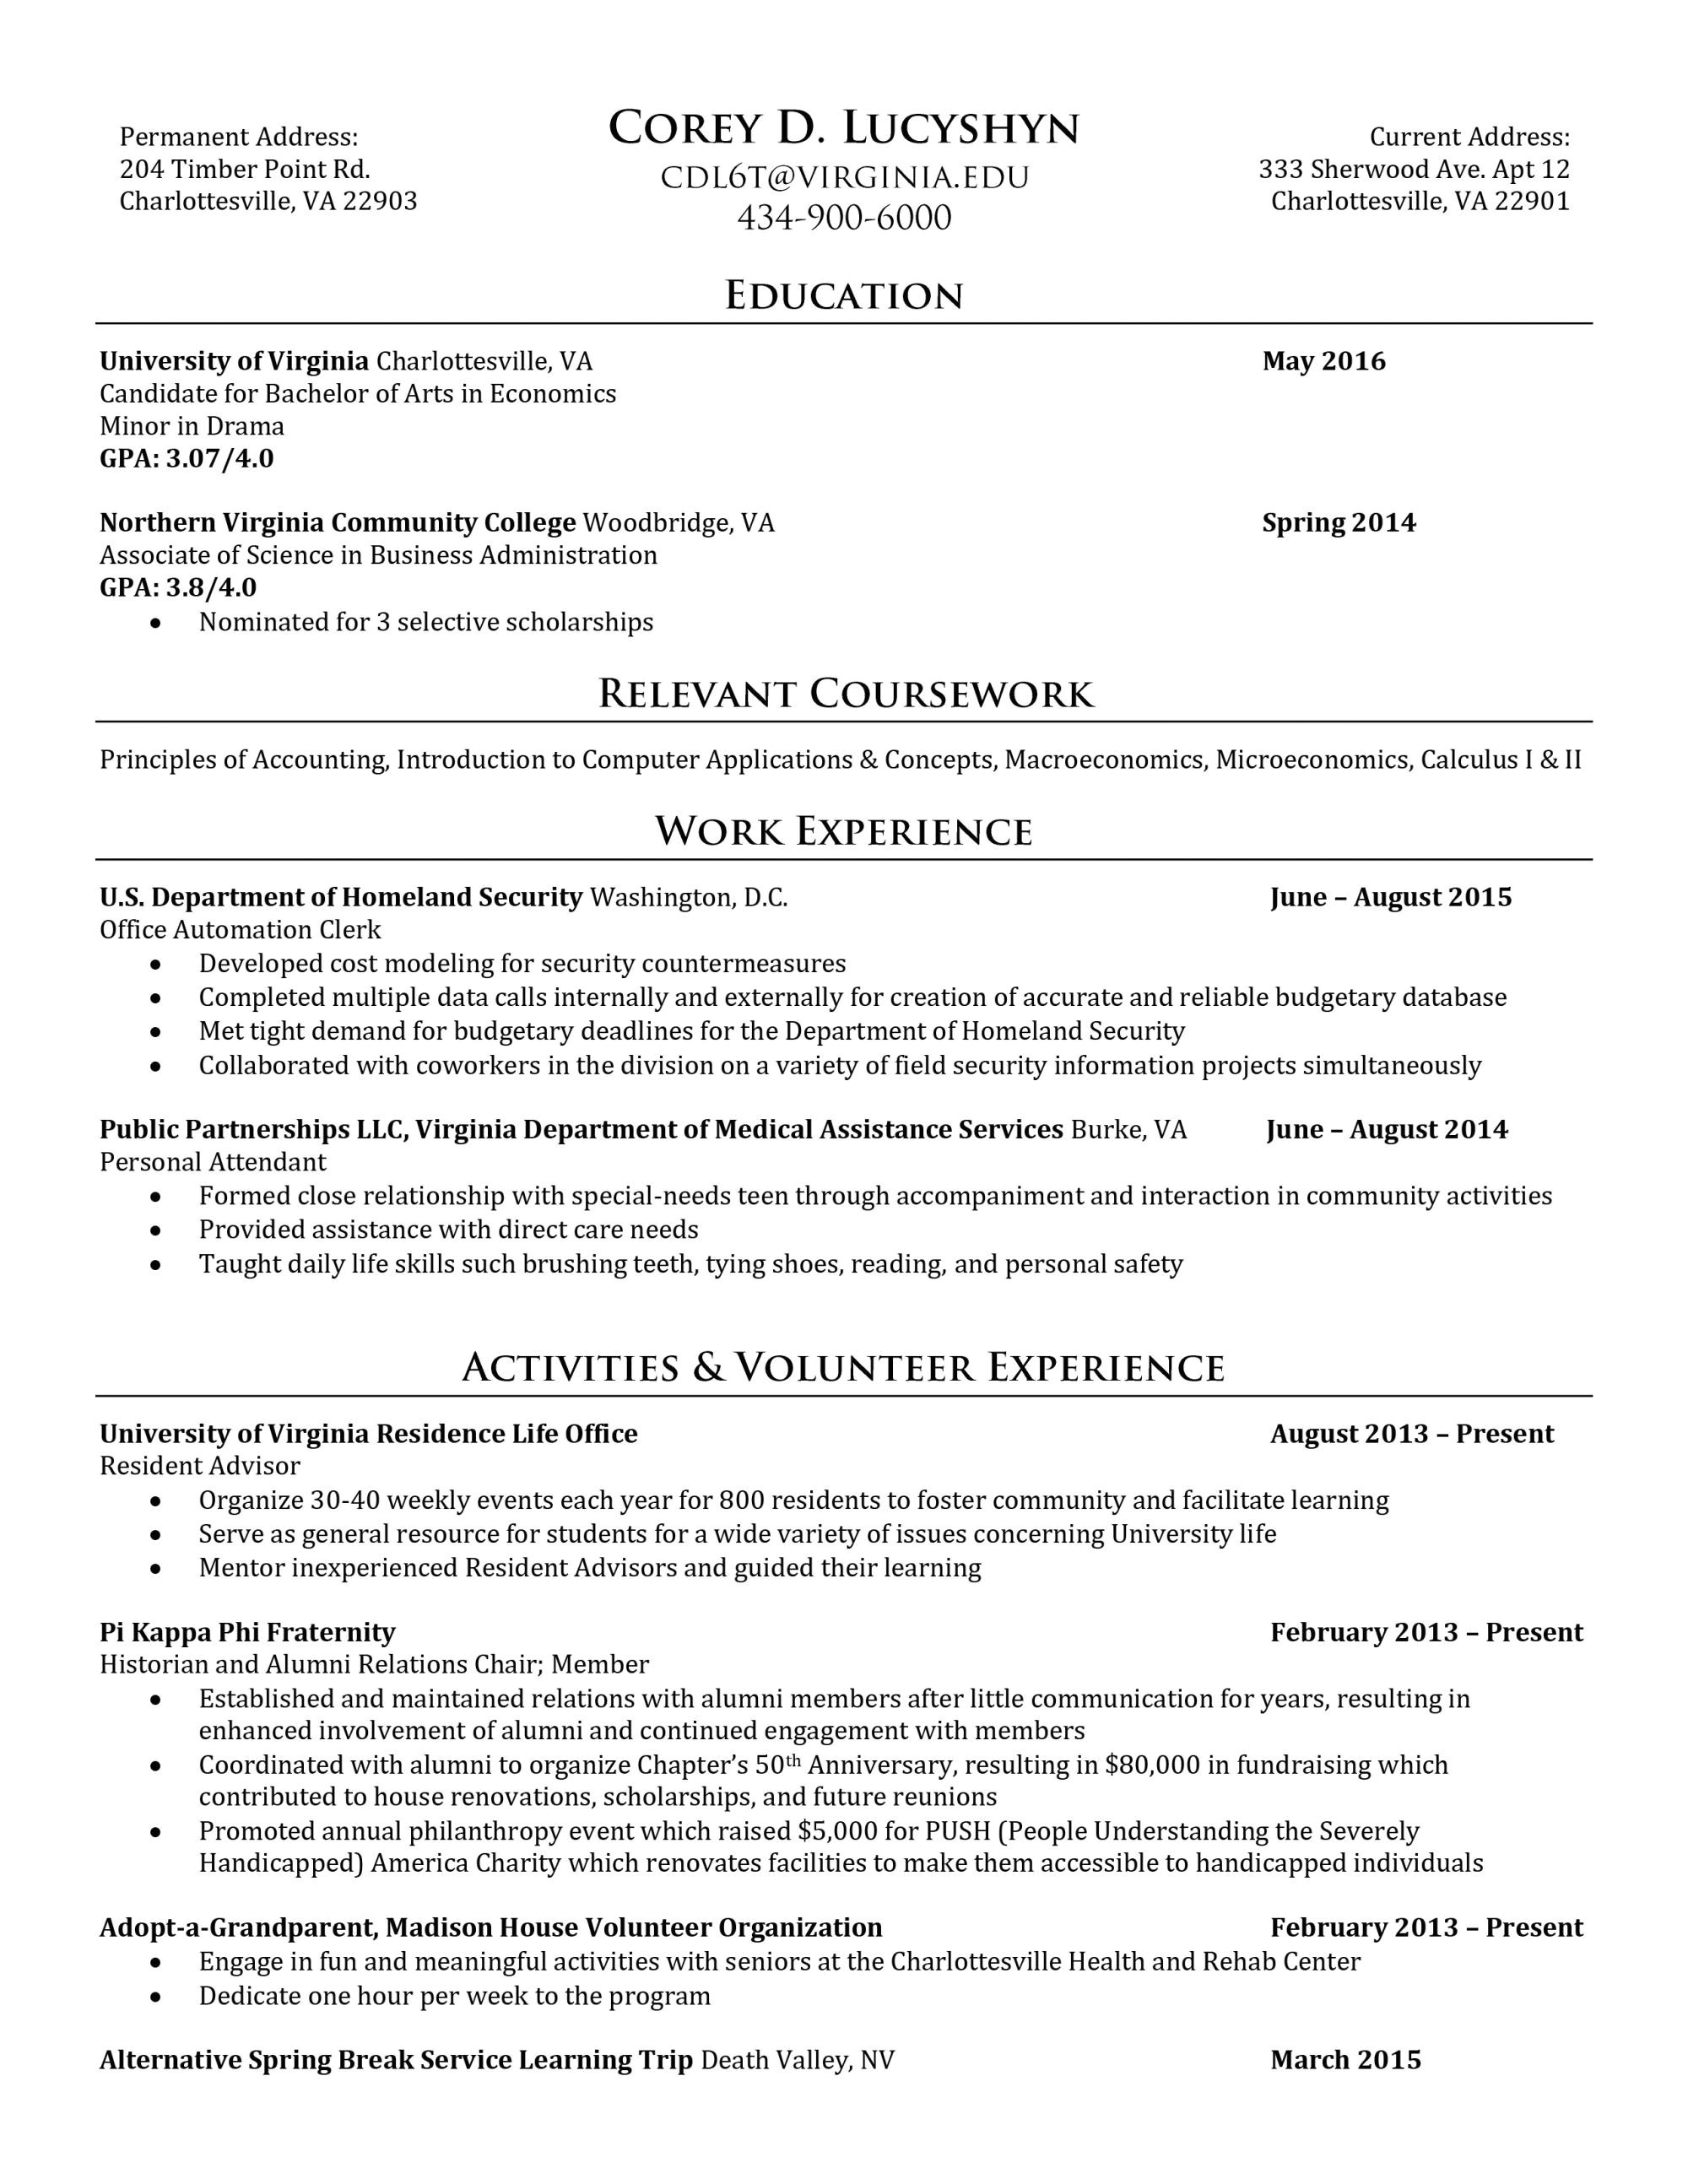 uva career center resume template